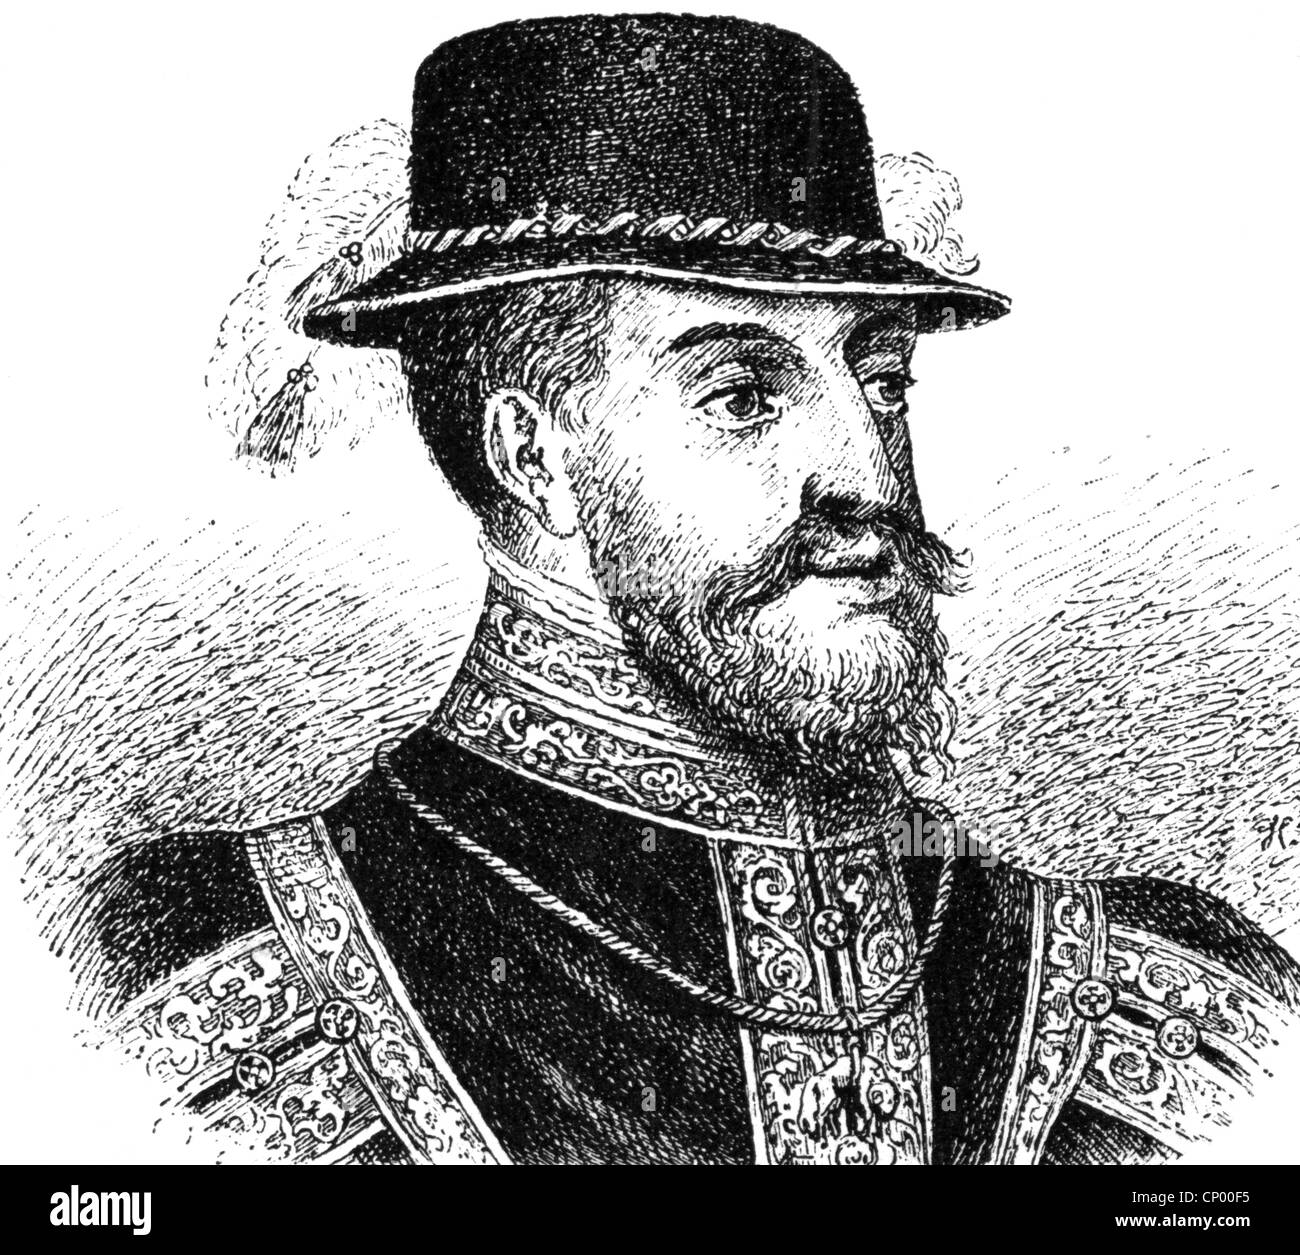 Philip II, 21.5.1527 - 13.9. 1598, King of Spain 16.1.1556 - 13.9.1598, portrait, wood engraving, 19th century, , Stock Photo